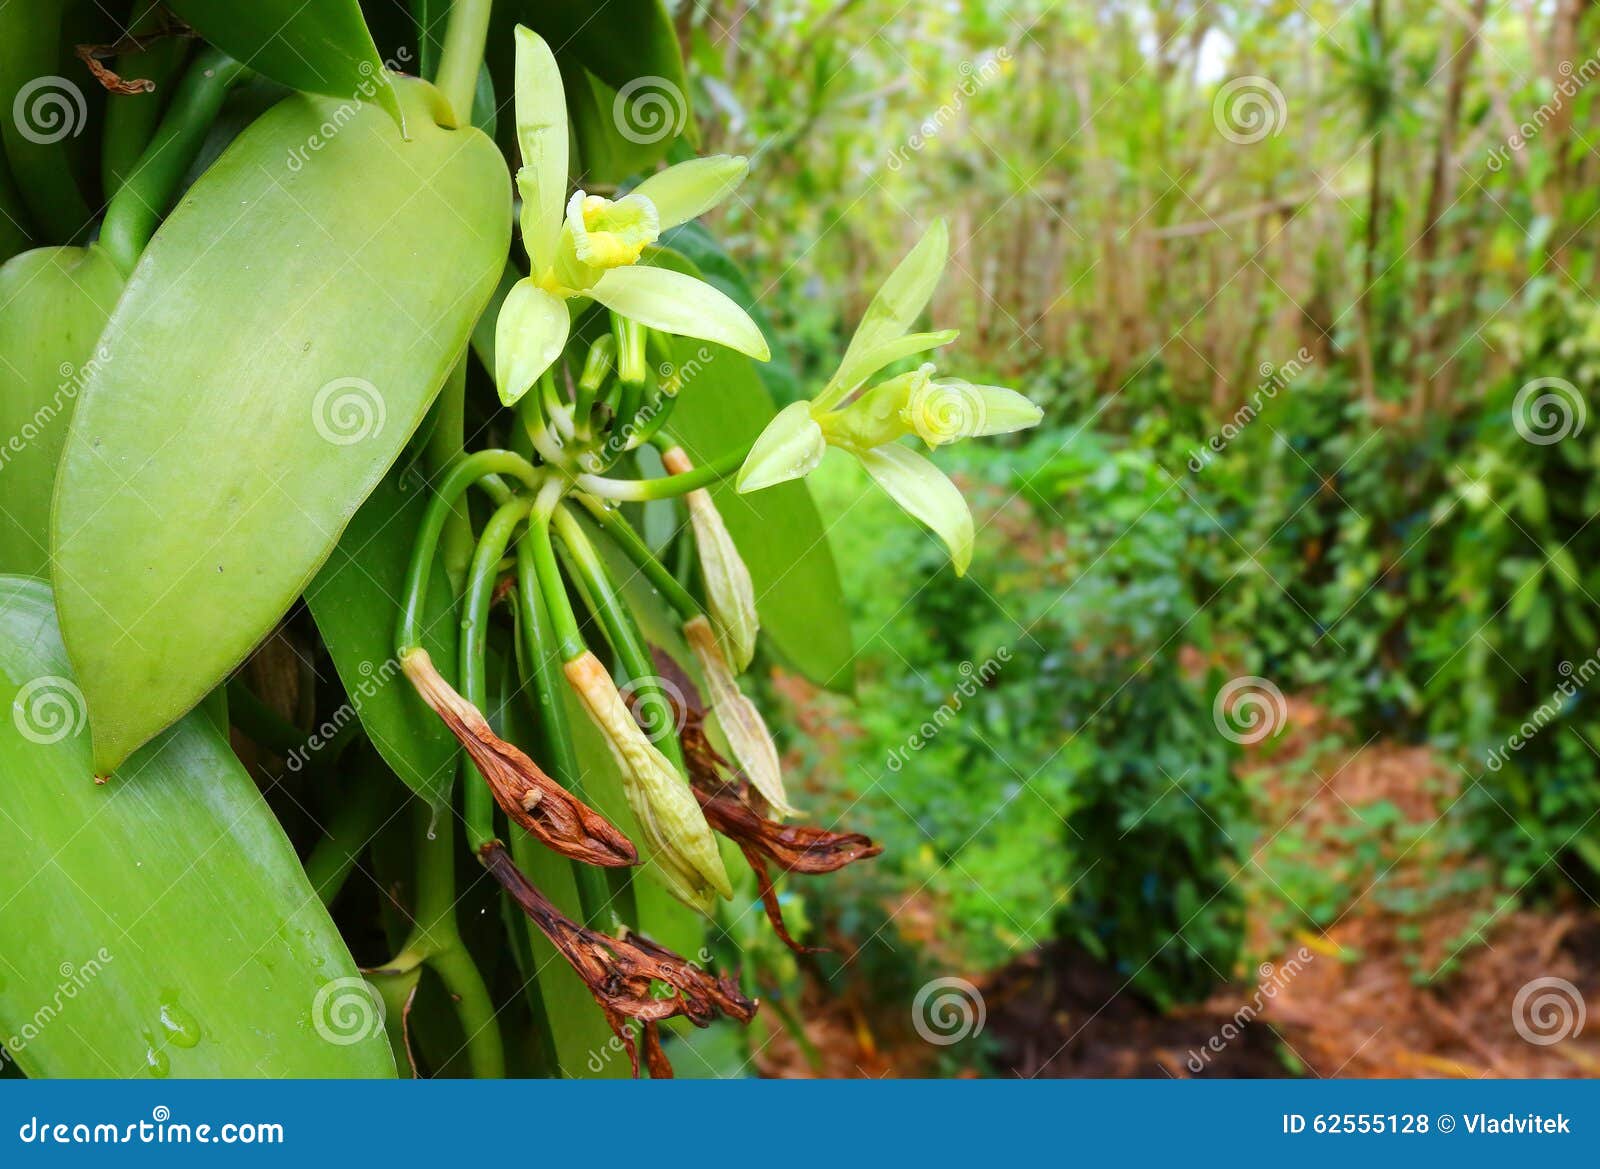 the vanilla flower on plantation.